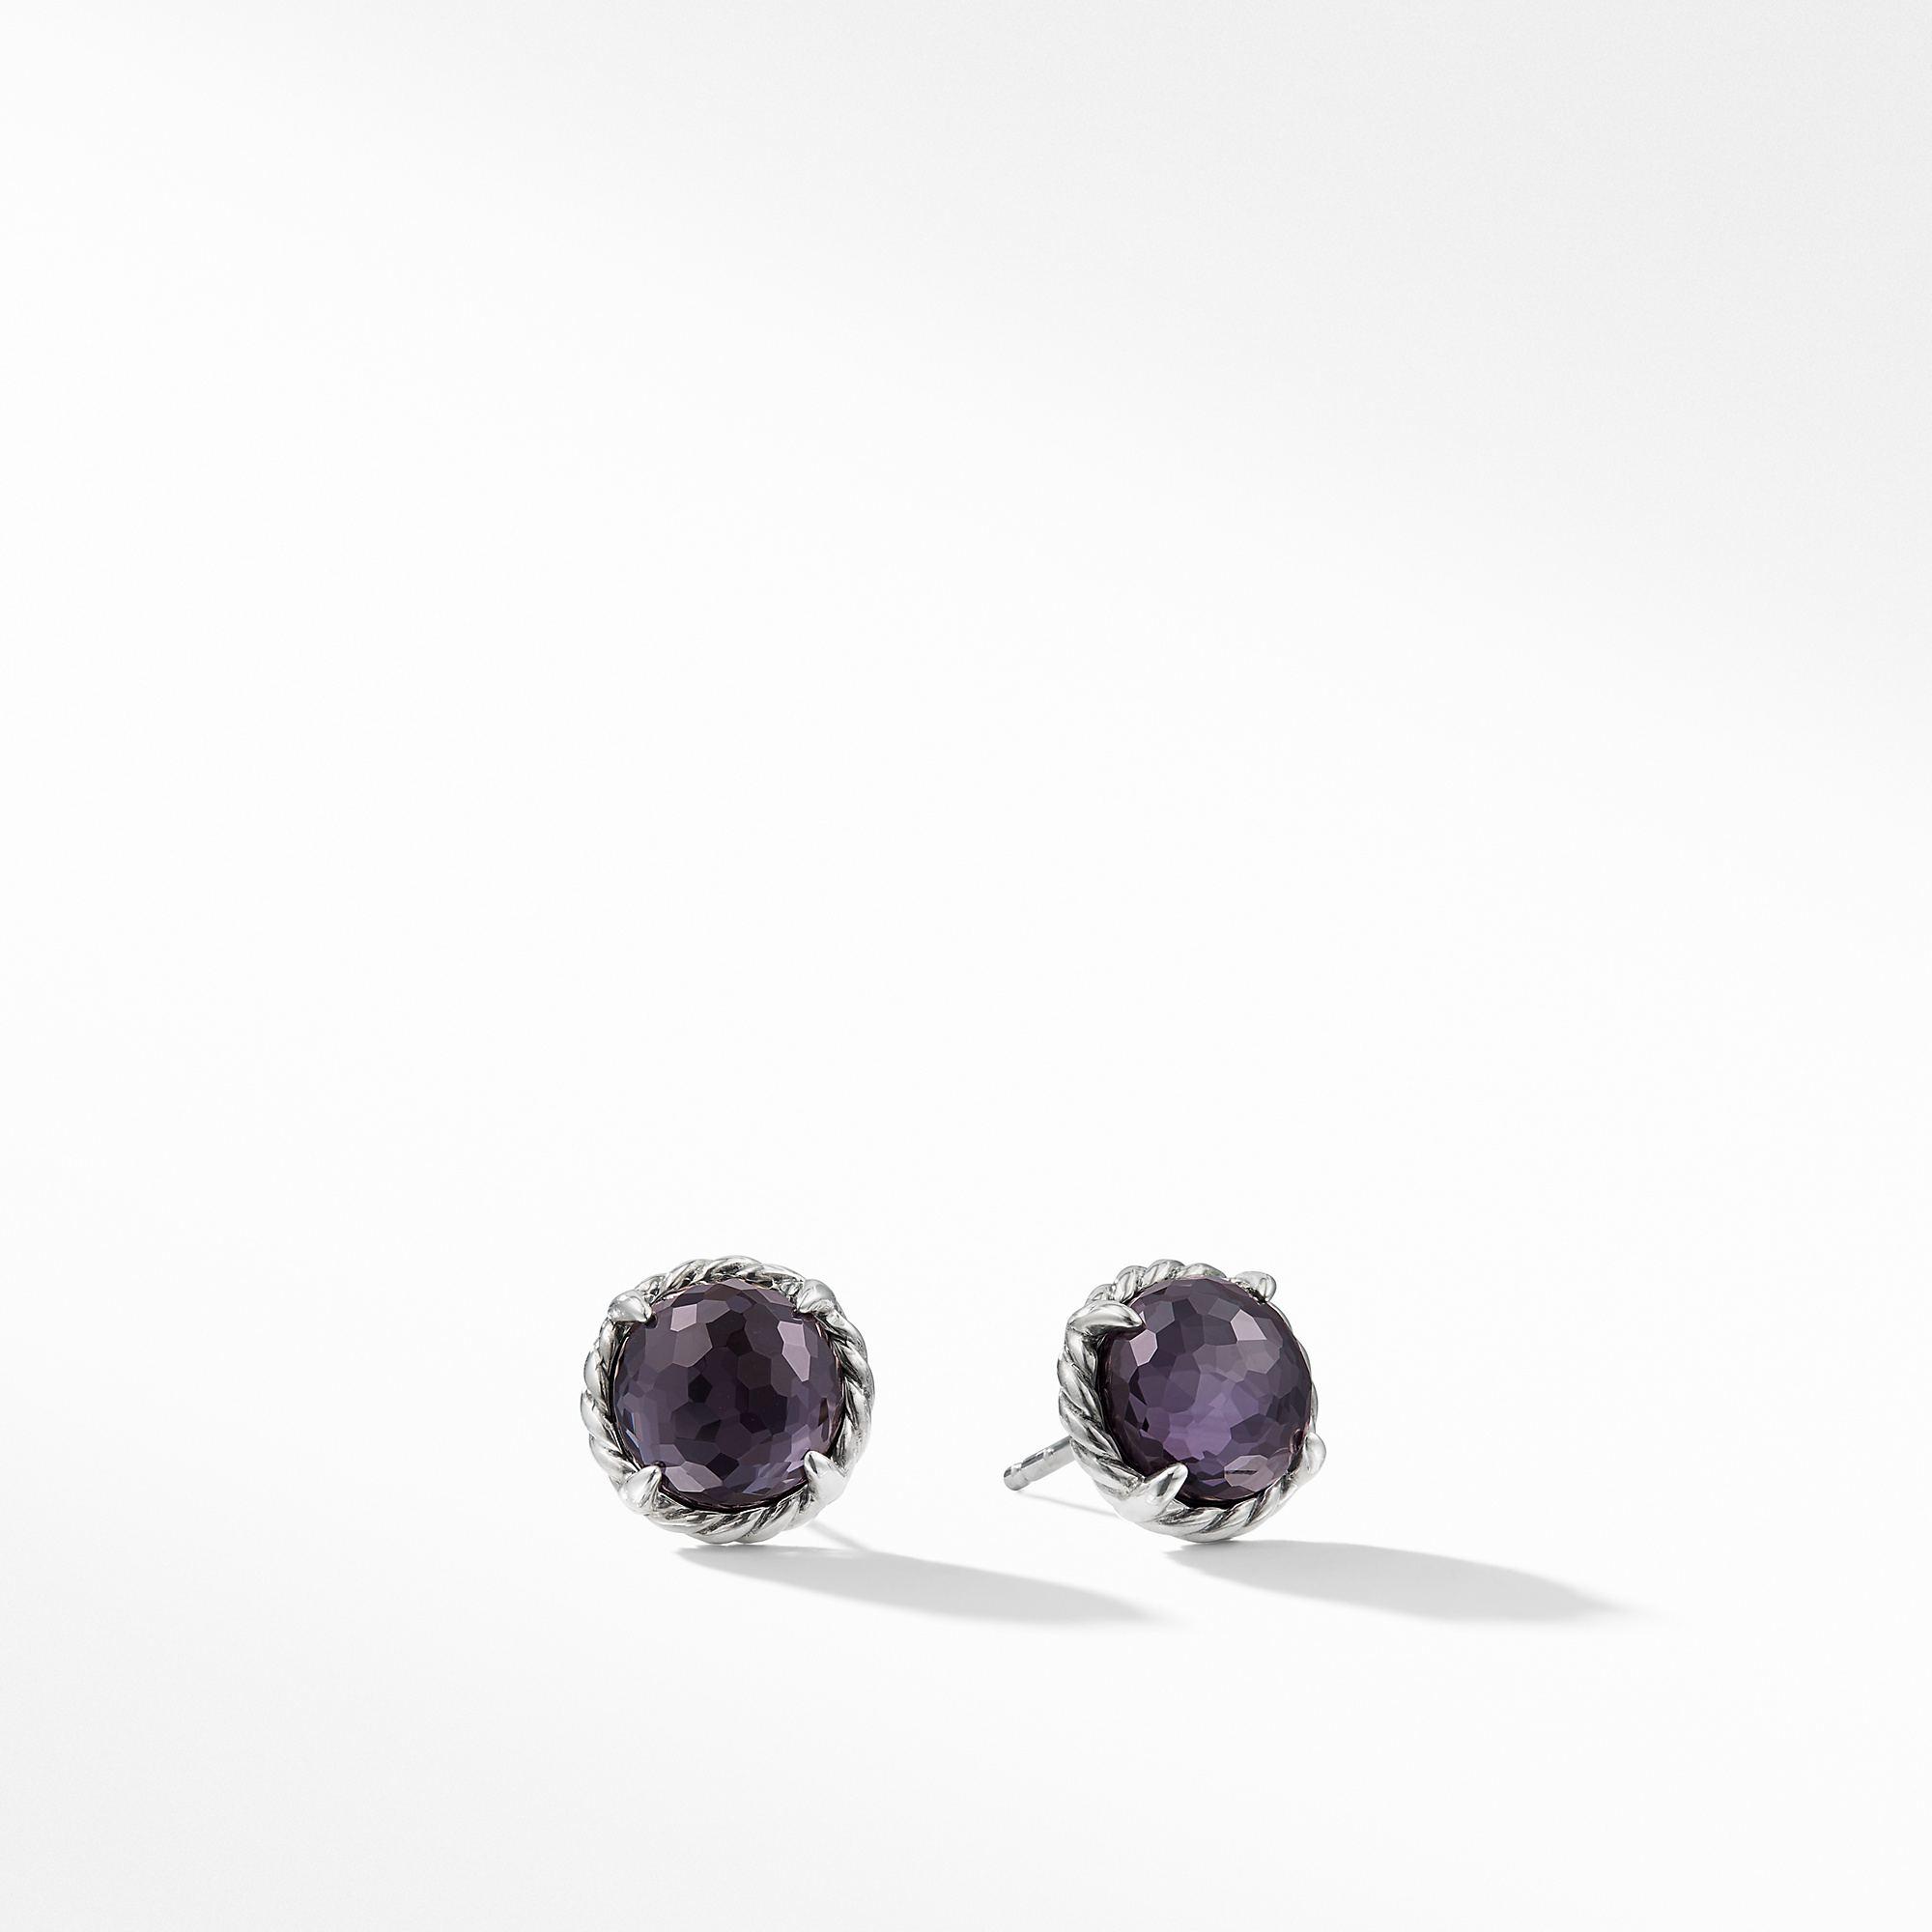 David Yurman Chatetaine Stud Earrings with Lavender Amethyst